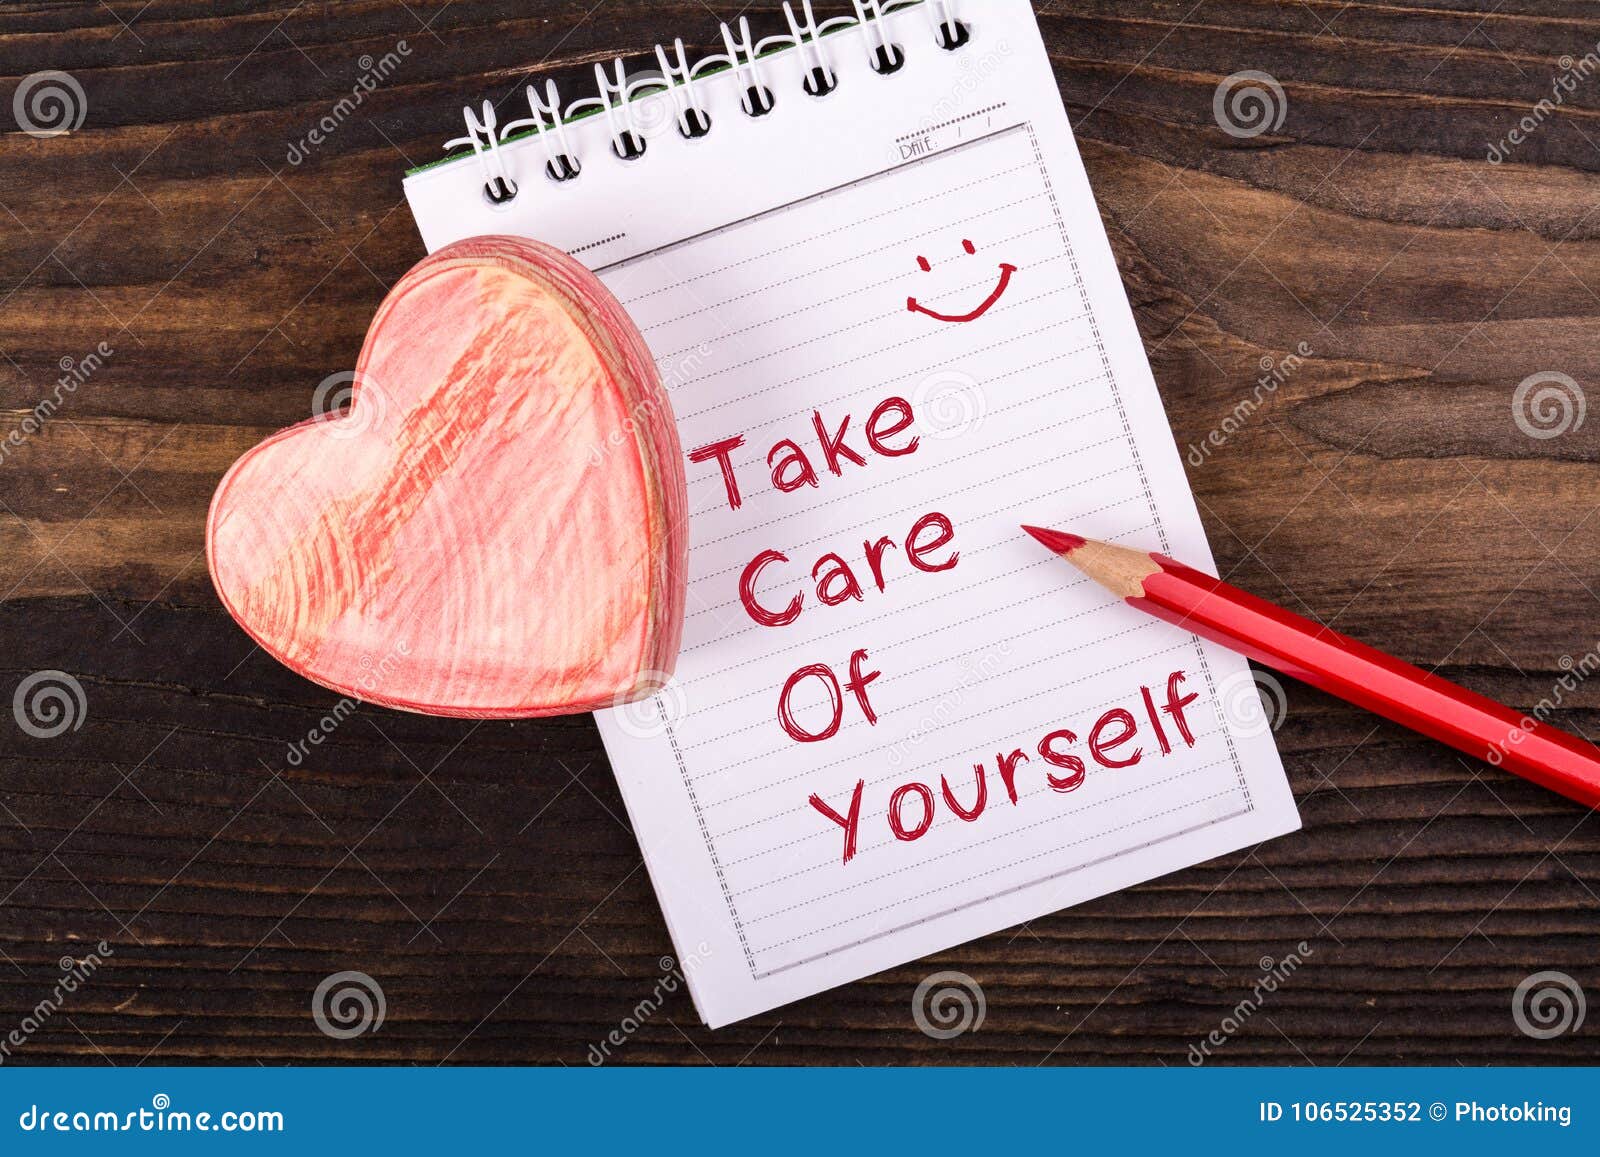 take care of yourself handwritten